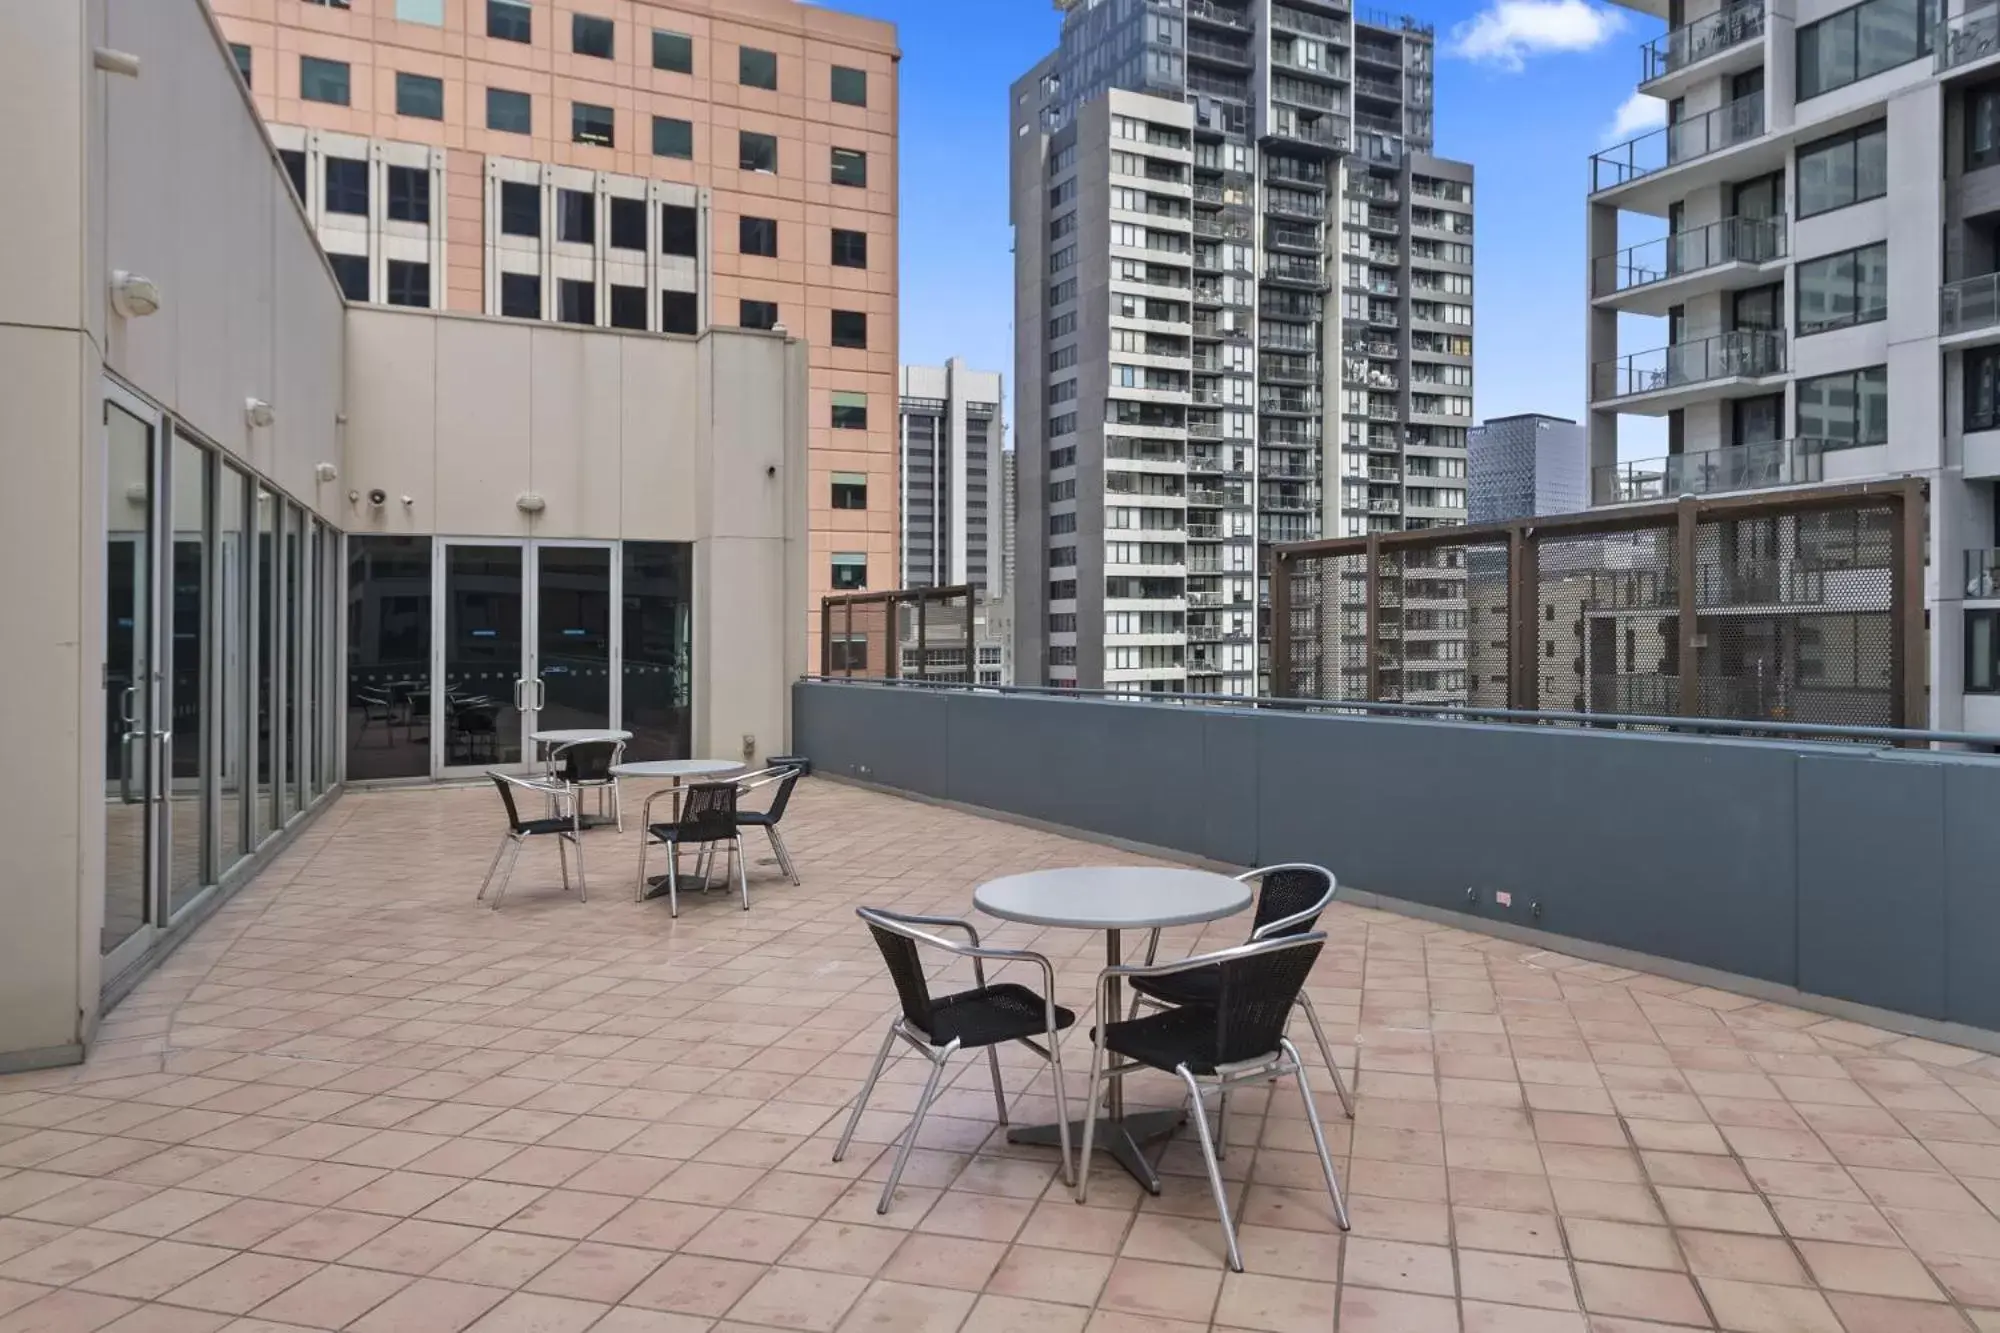 Balcony/Terrace in YEHS Hotel Melbourne CBD